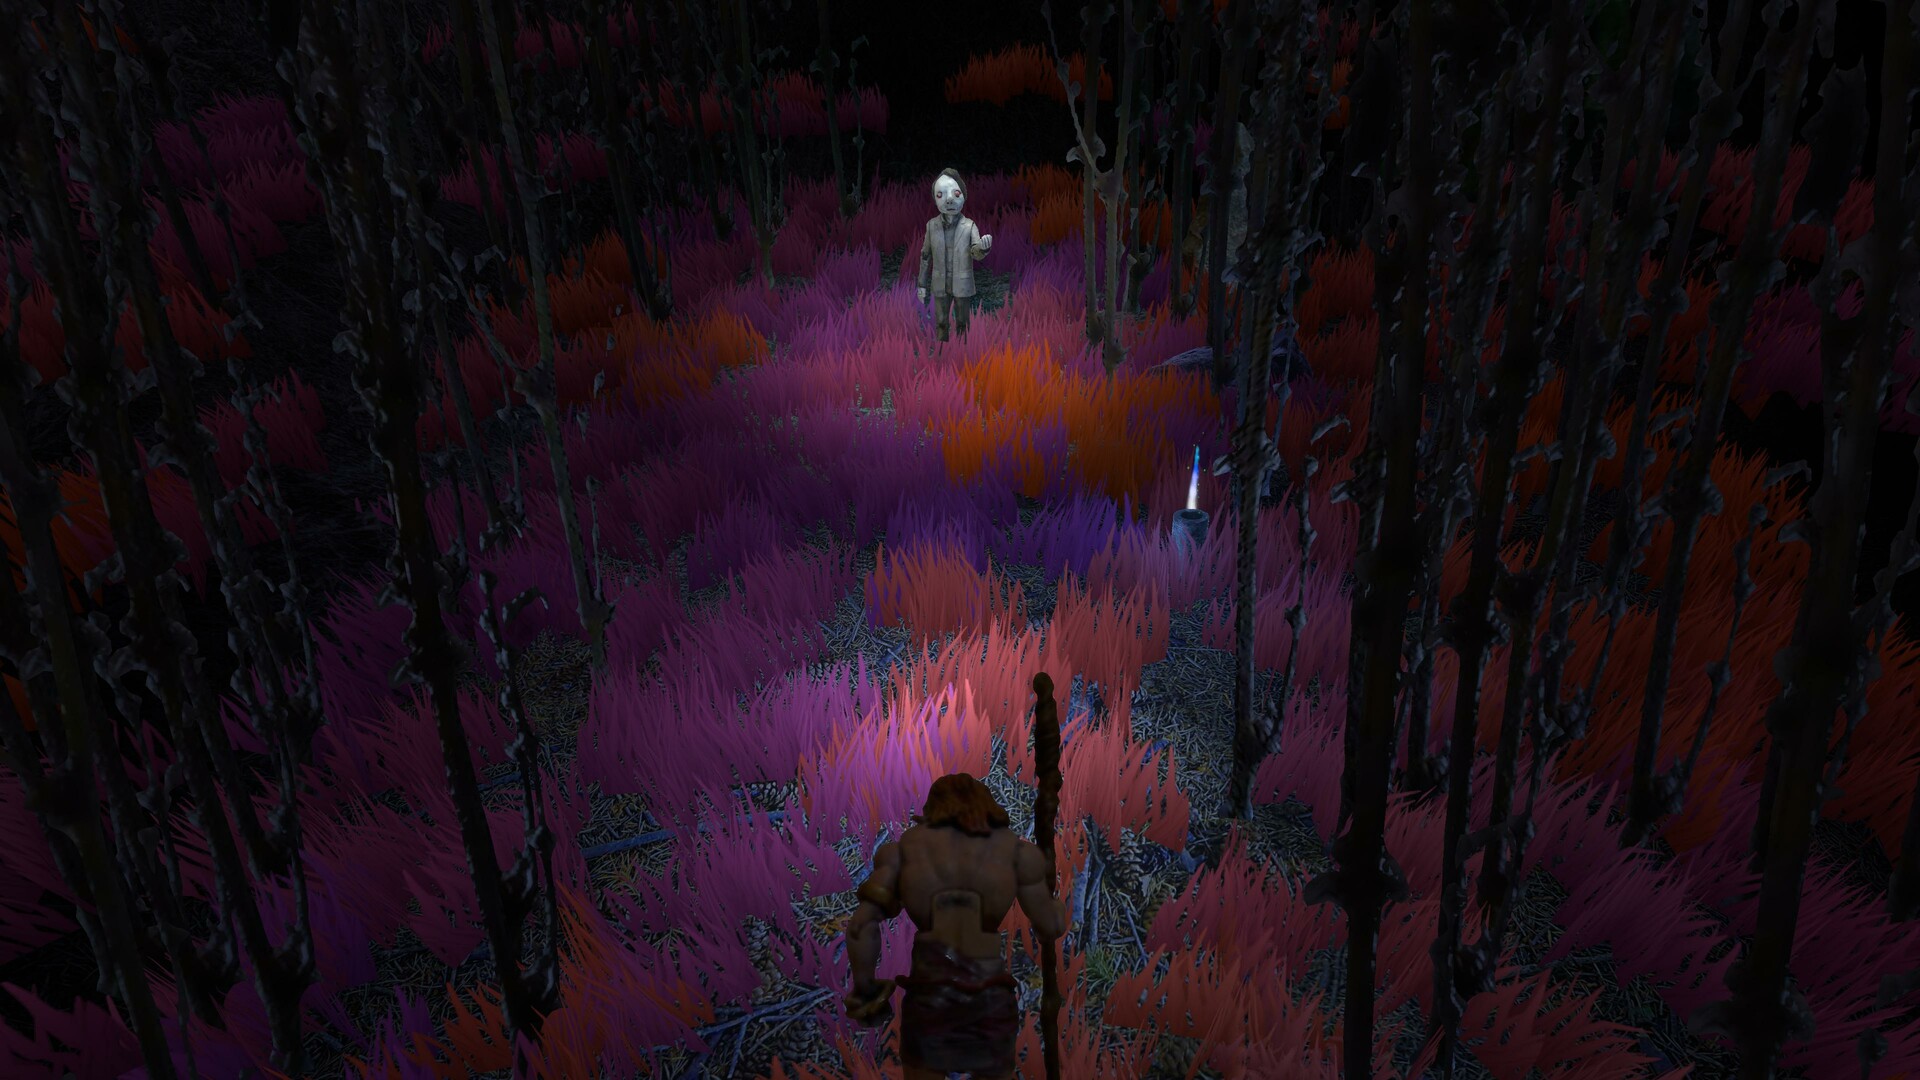 approaching a boy in a dark forest